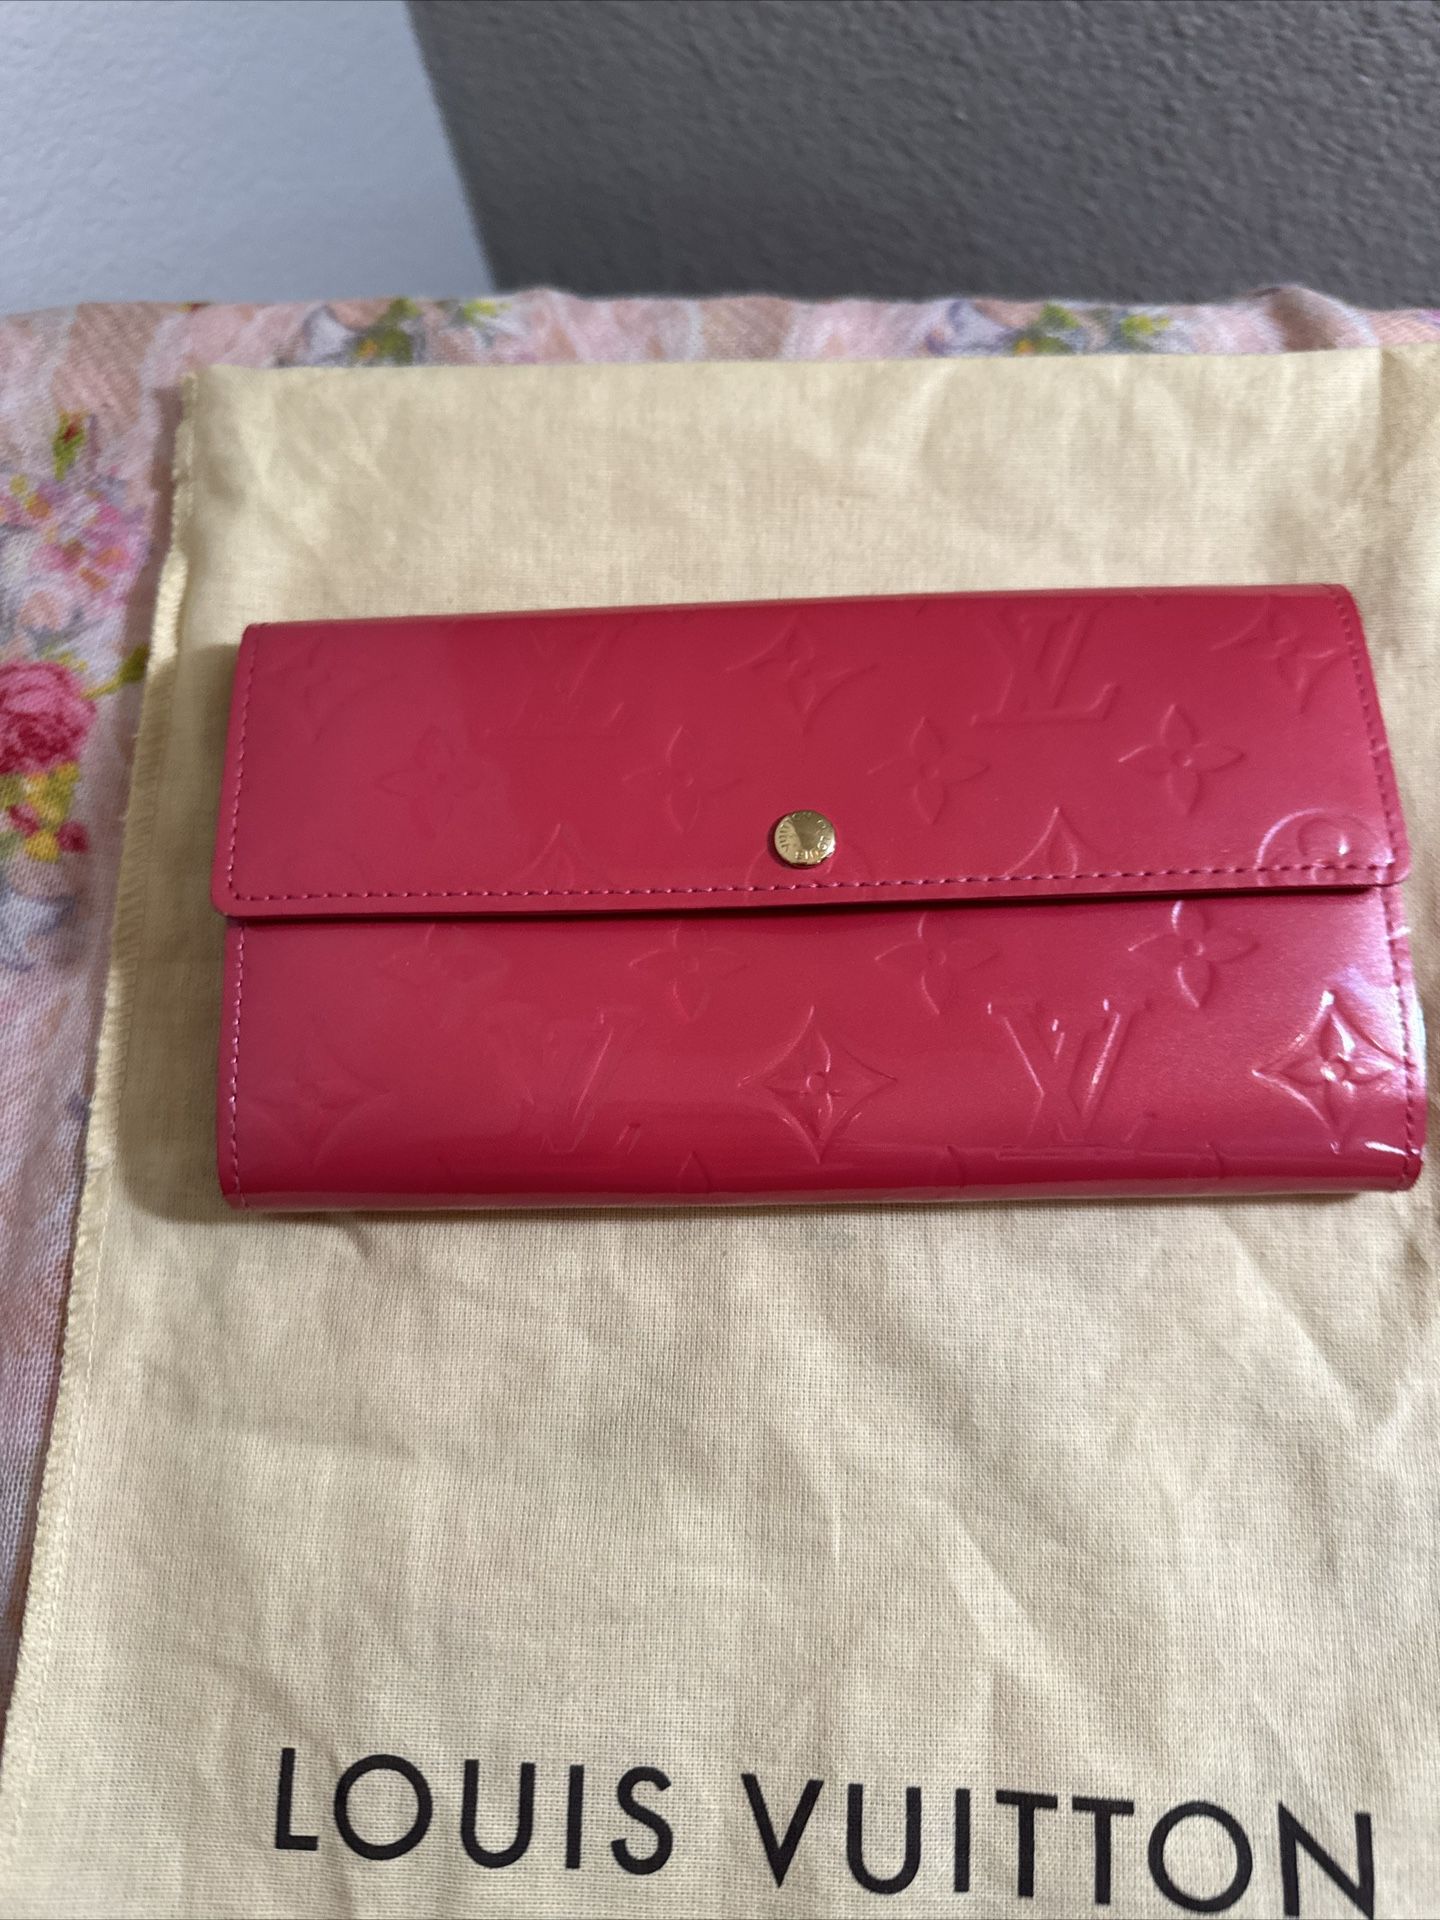 Authentic Louis Vuitton VernisRaspberry Pink Long Wallet